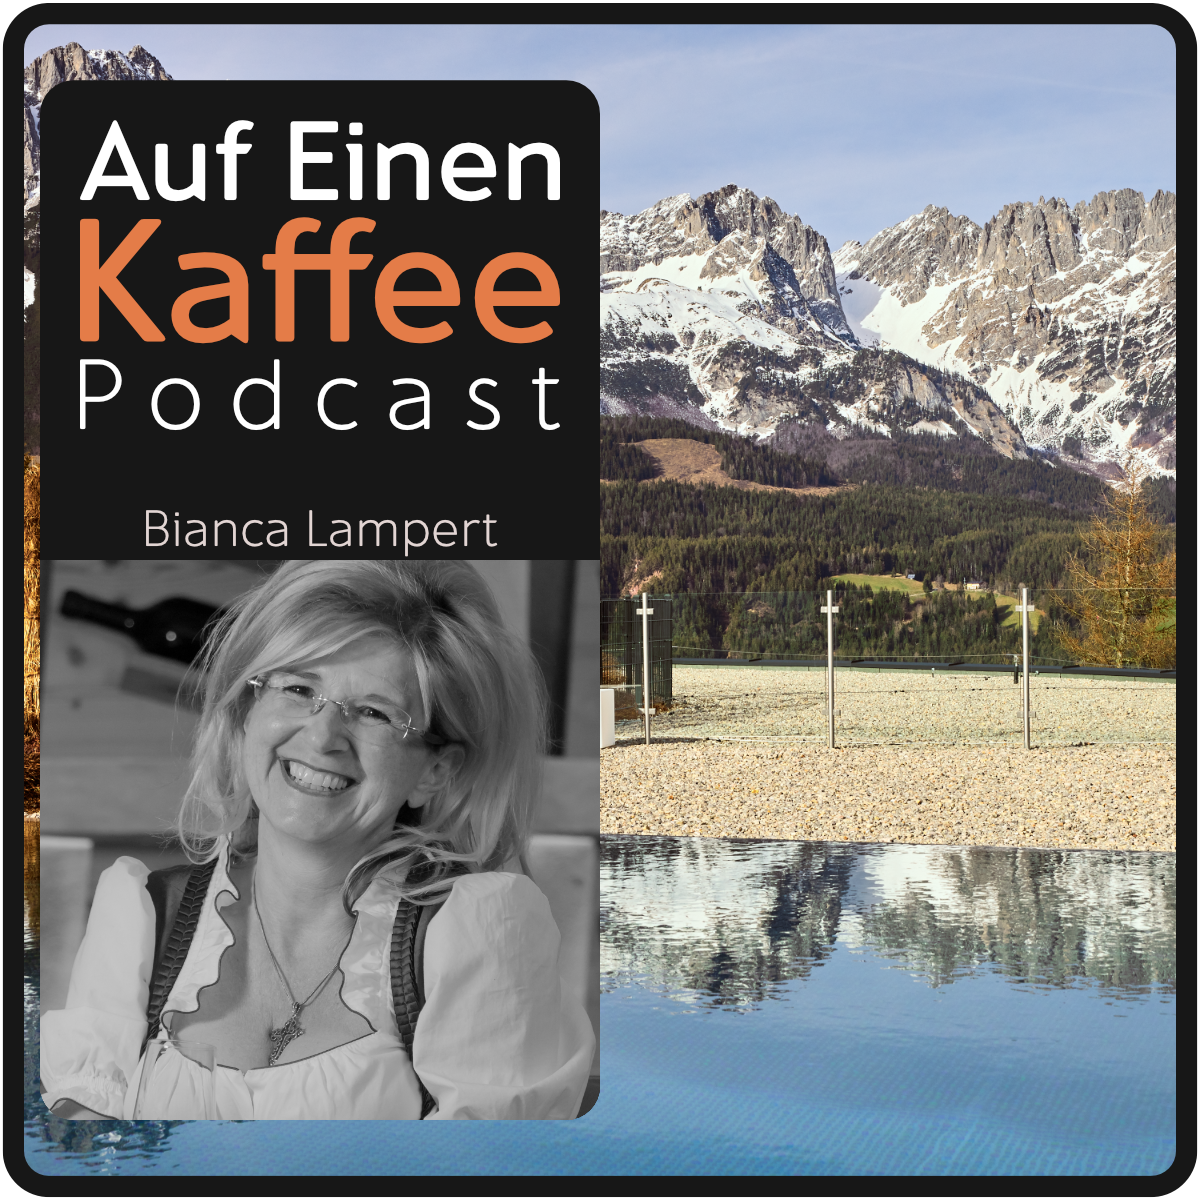 Cover - Cafe010-Bianca Lampert - Hotel Kaiserhof - AufEinenKaffee-Podcast - Mark 1